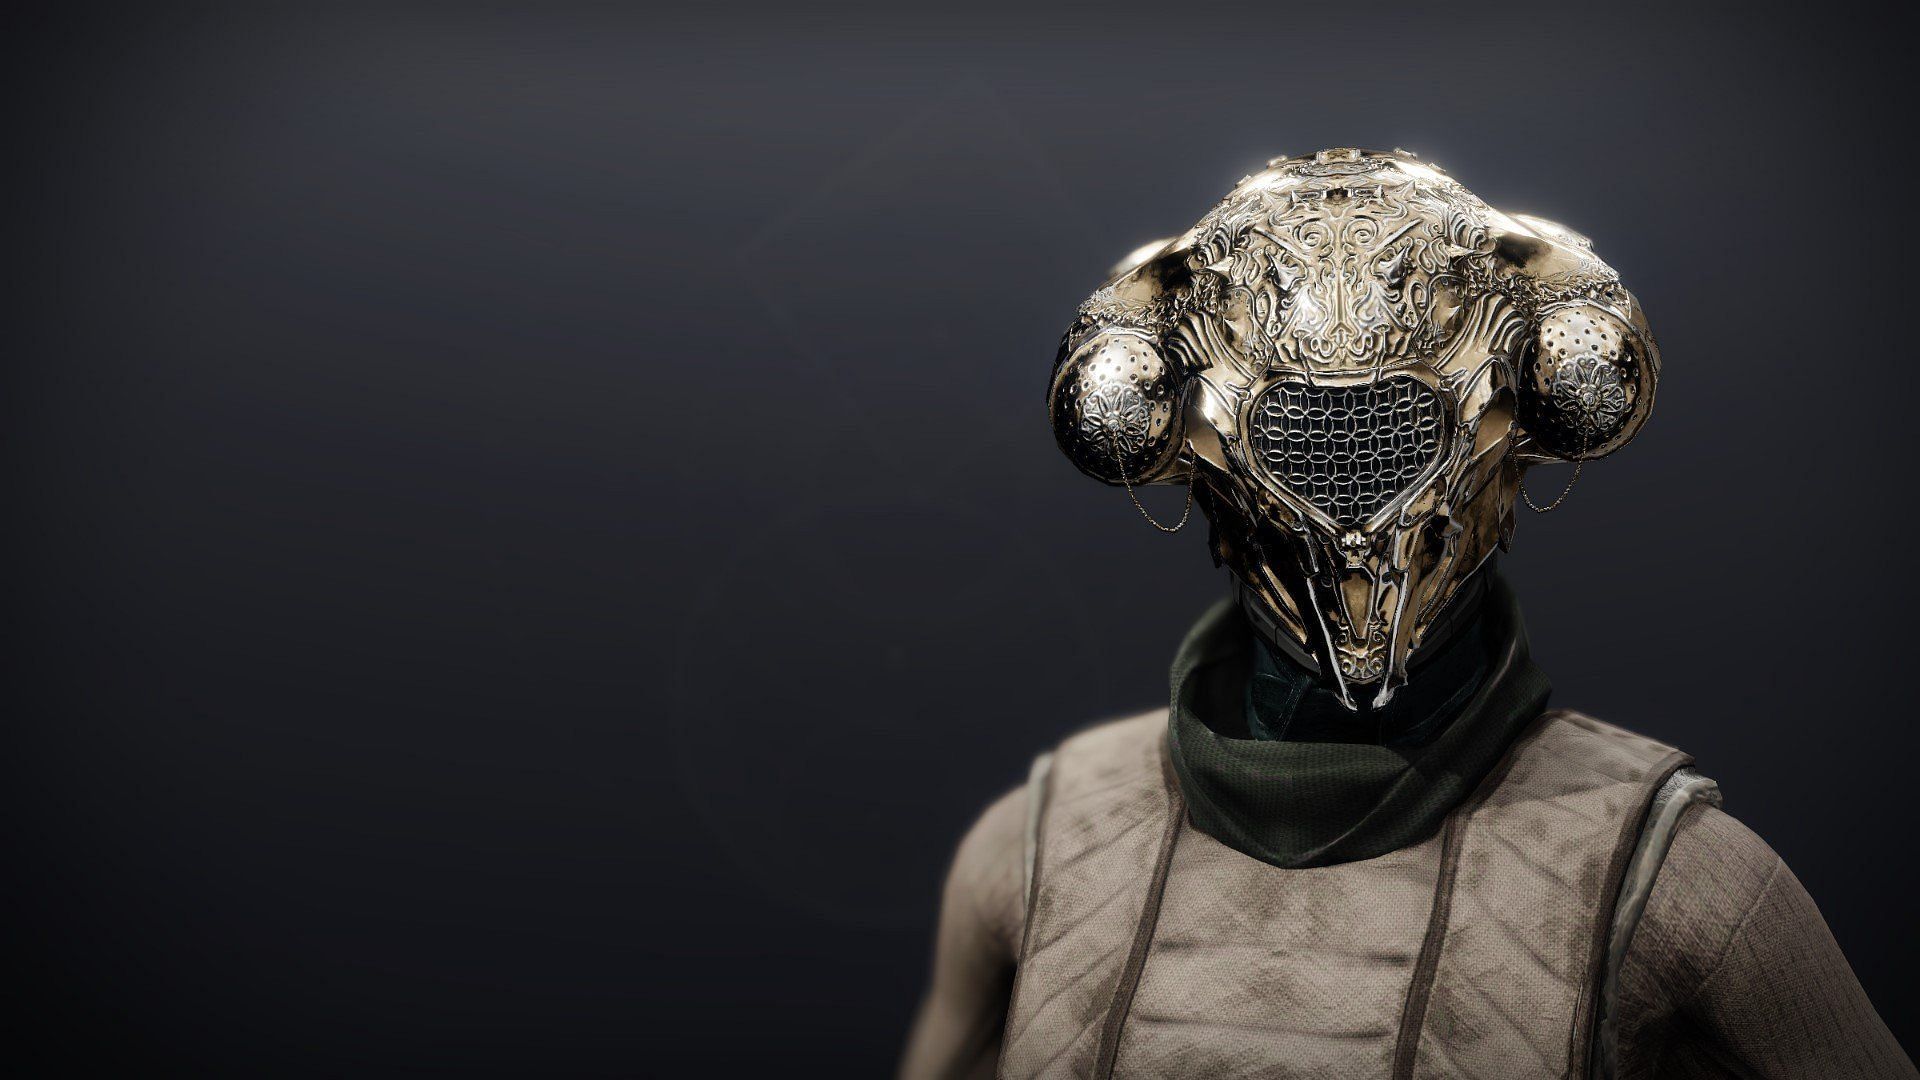 The Dawn Chorus Exotic helmet works well in Destiny 2 (Image via Bungie)